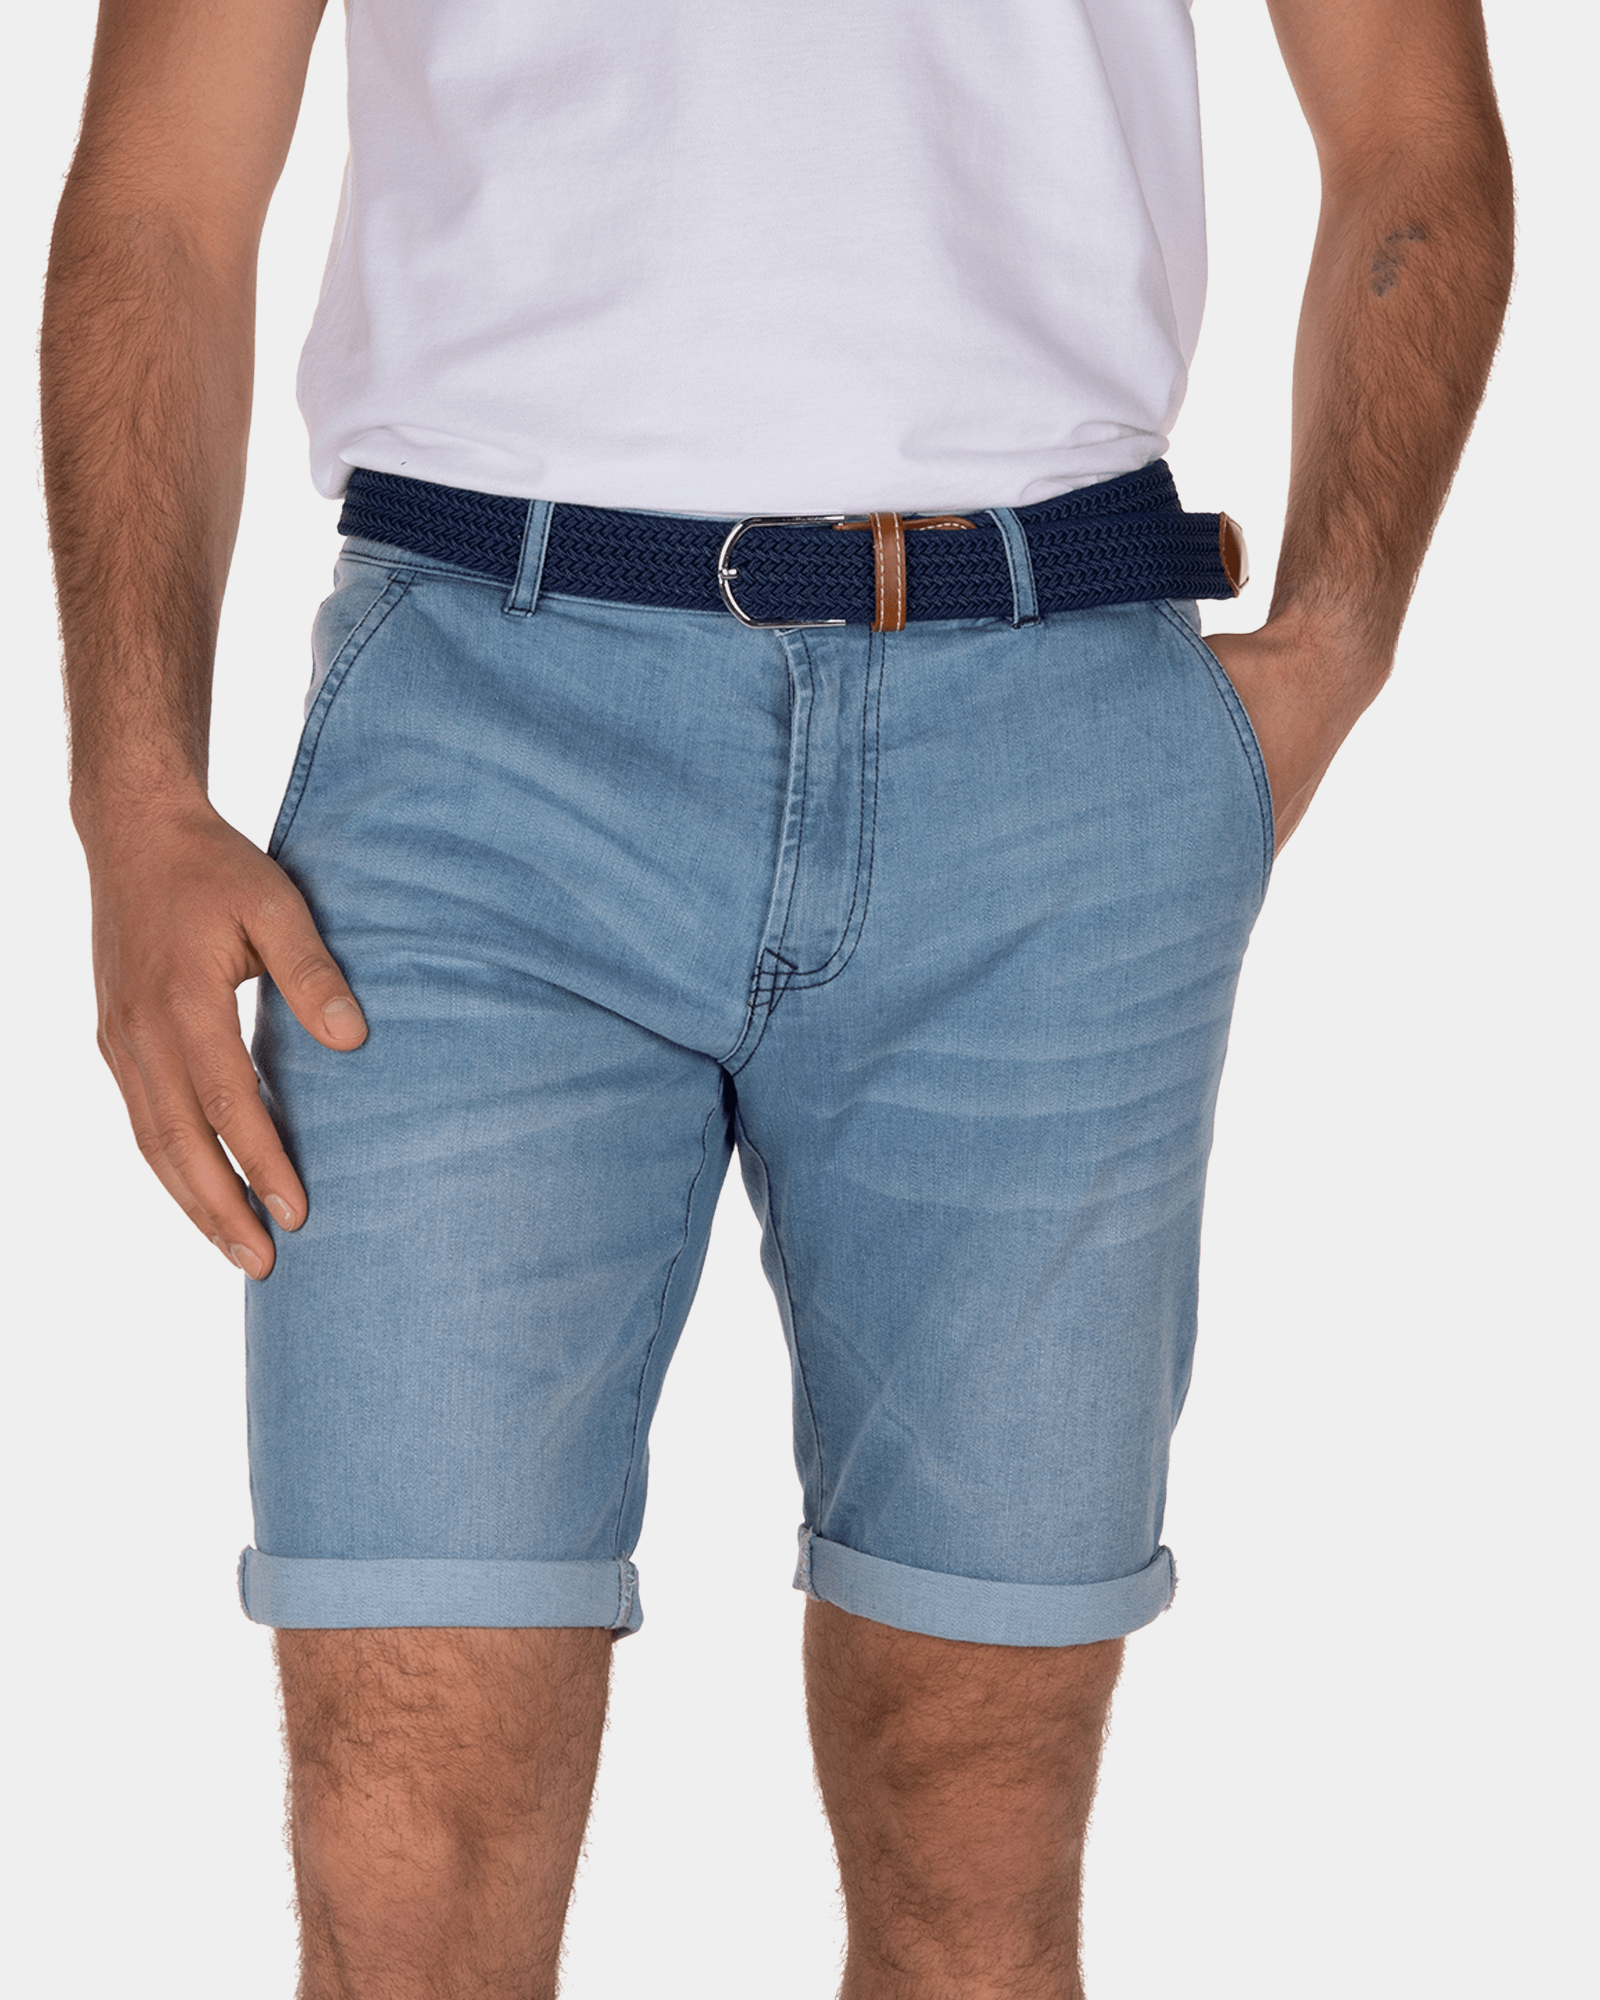 Dunedine jeans shorts - Light Auckland Zealand | Stone NZA New